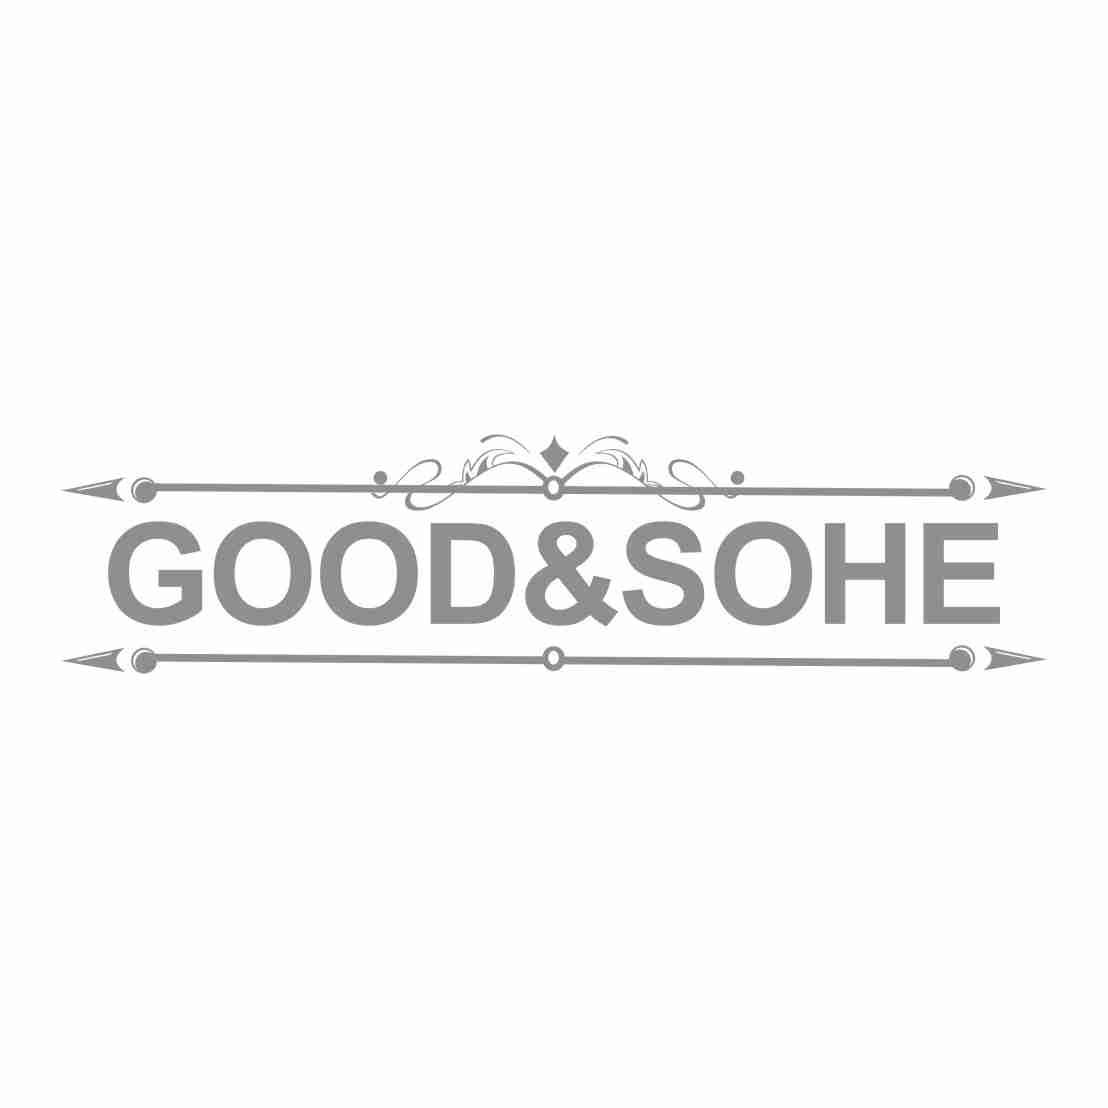 GOOD&SOHE商标转让